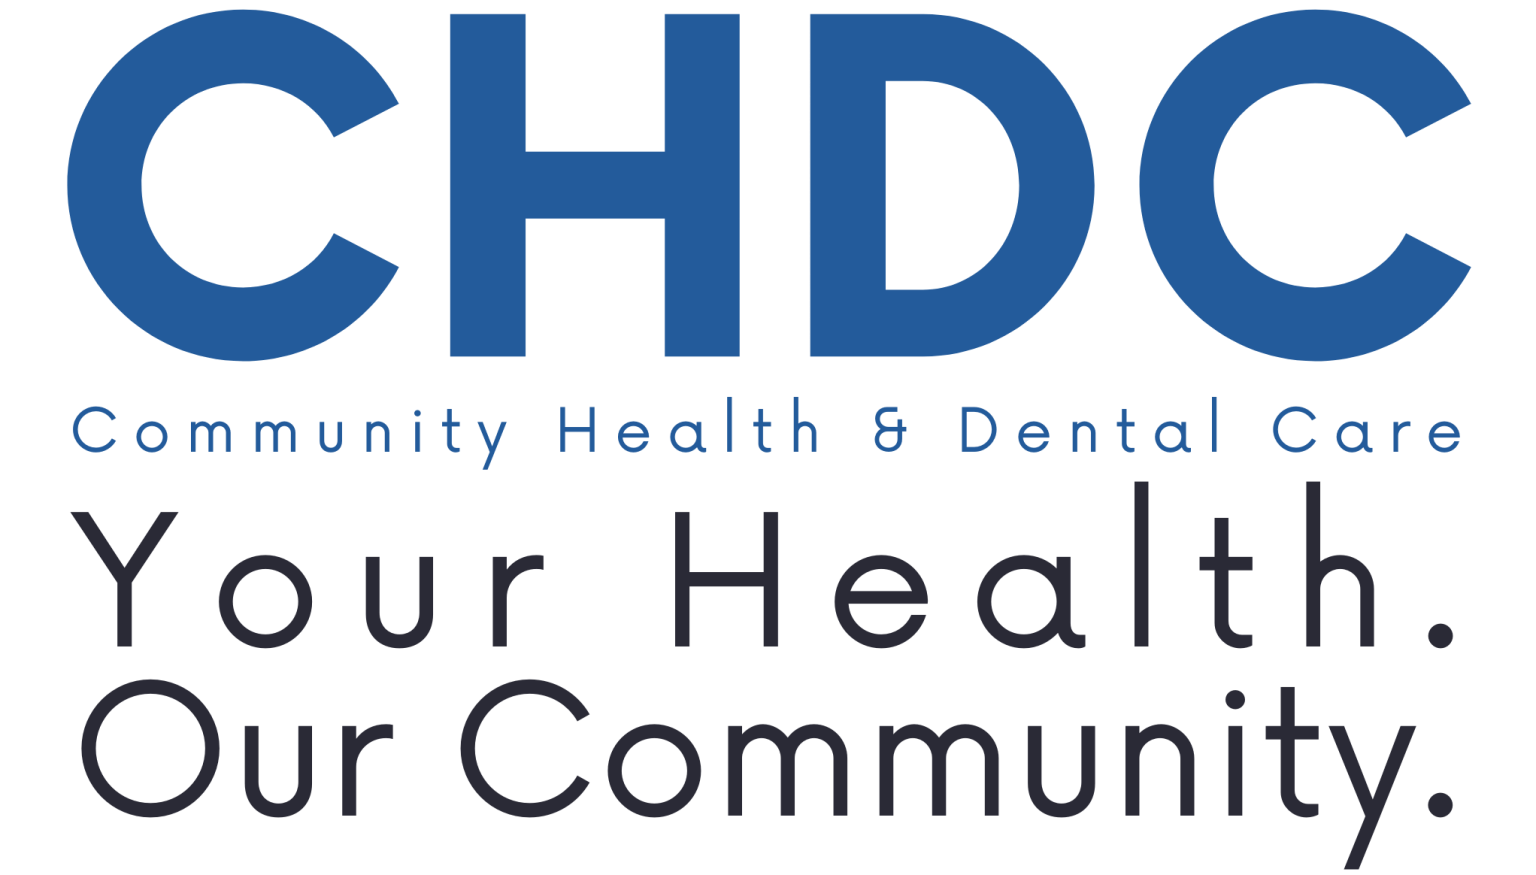 Community Health & Dental Care banner logo